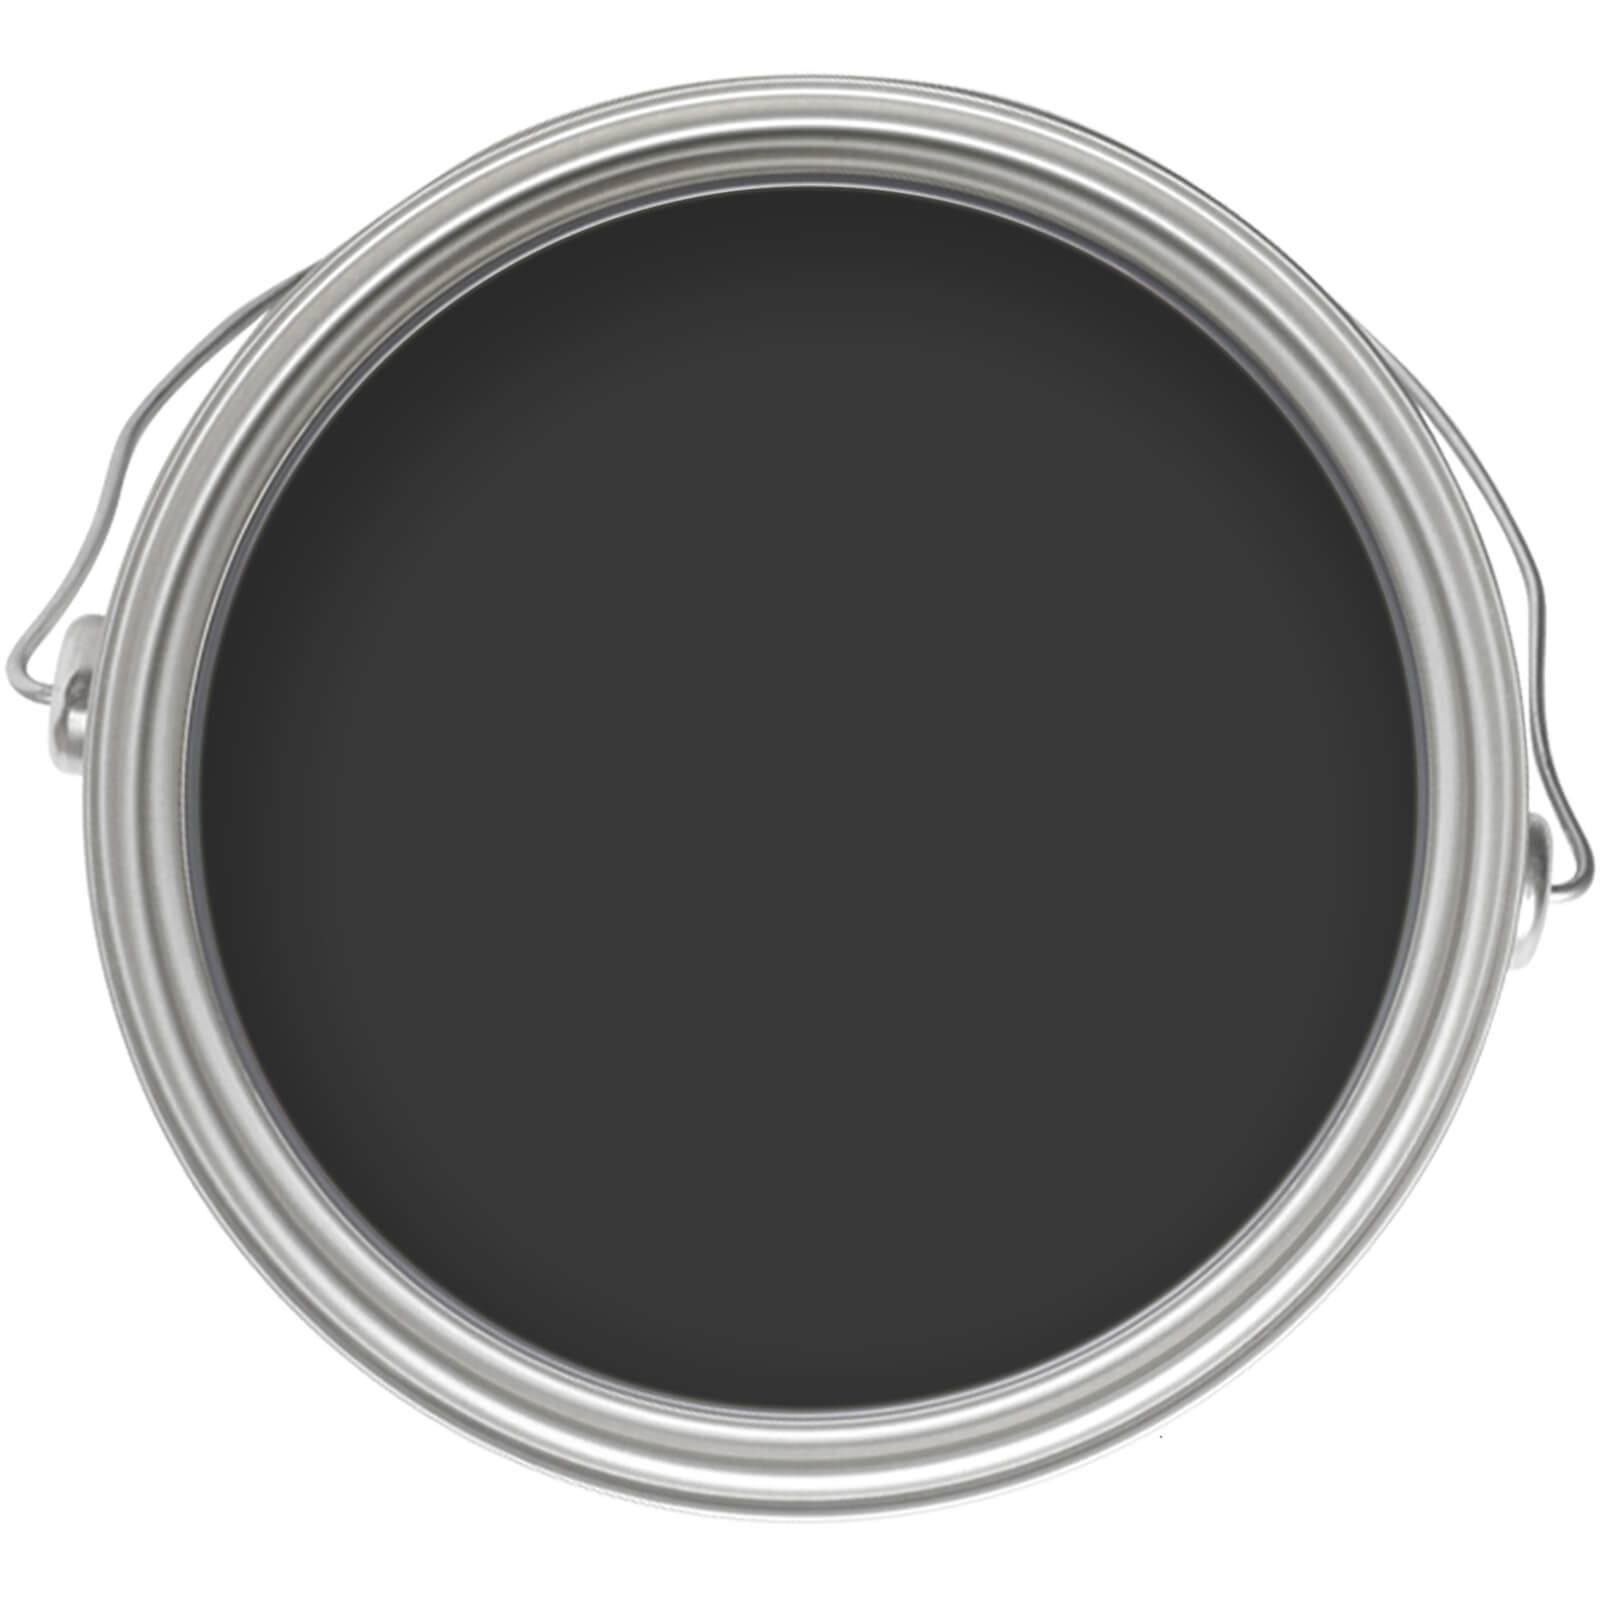 Homebase Exterior Gloss Paint - Black 2.5L